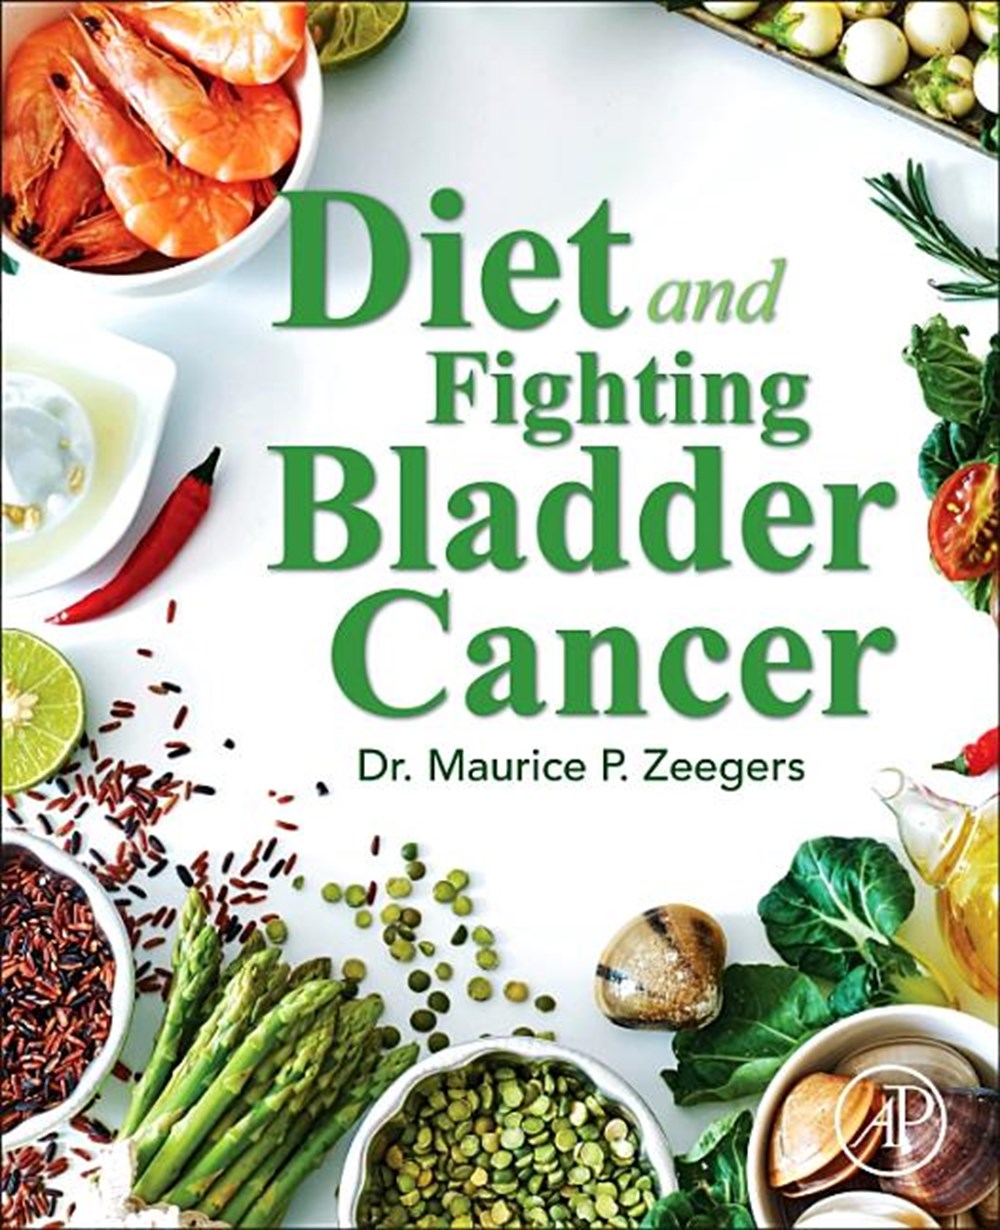 Diet and Fighting Bladder Cancer